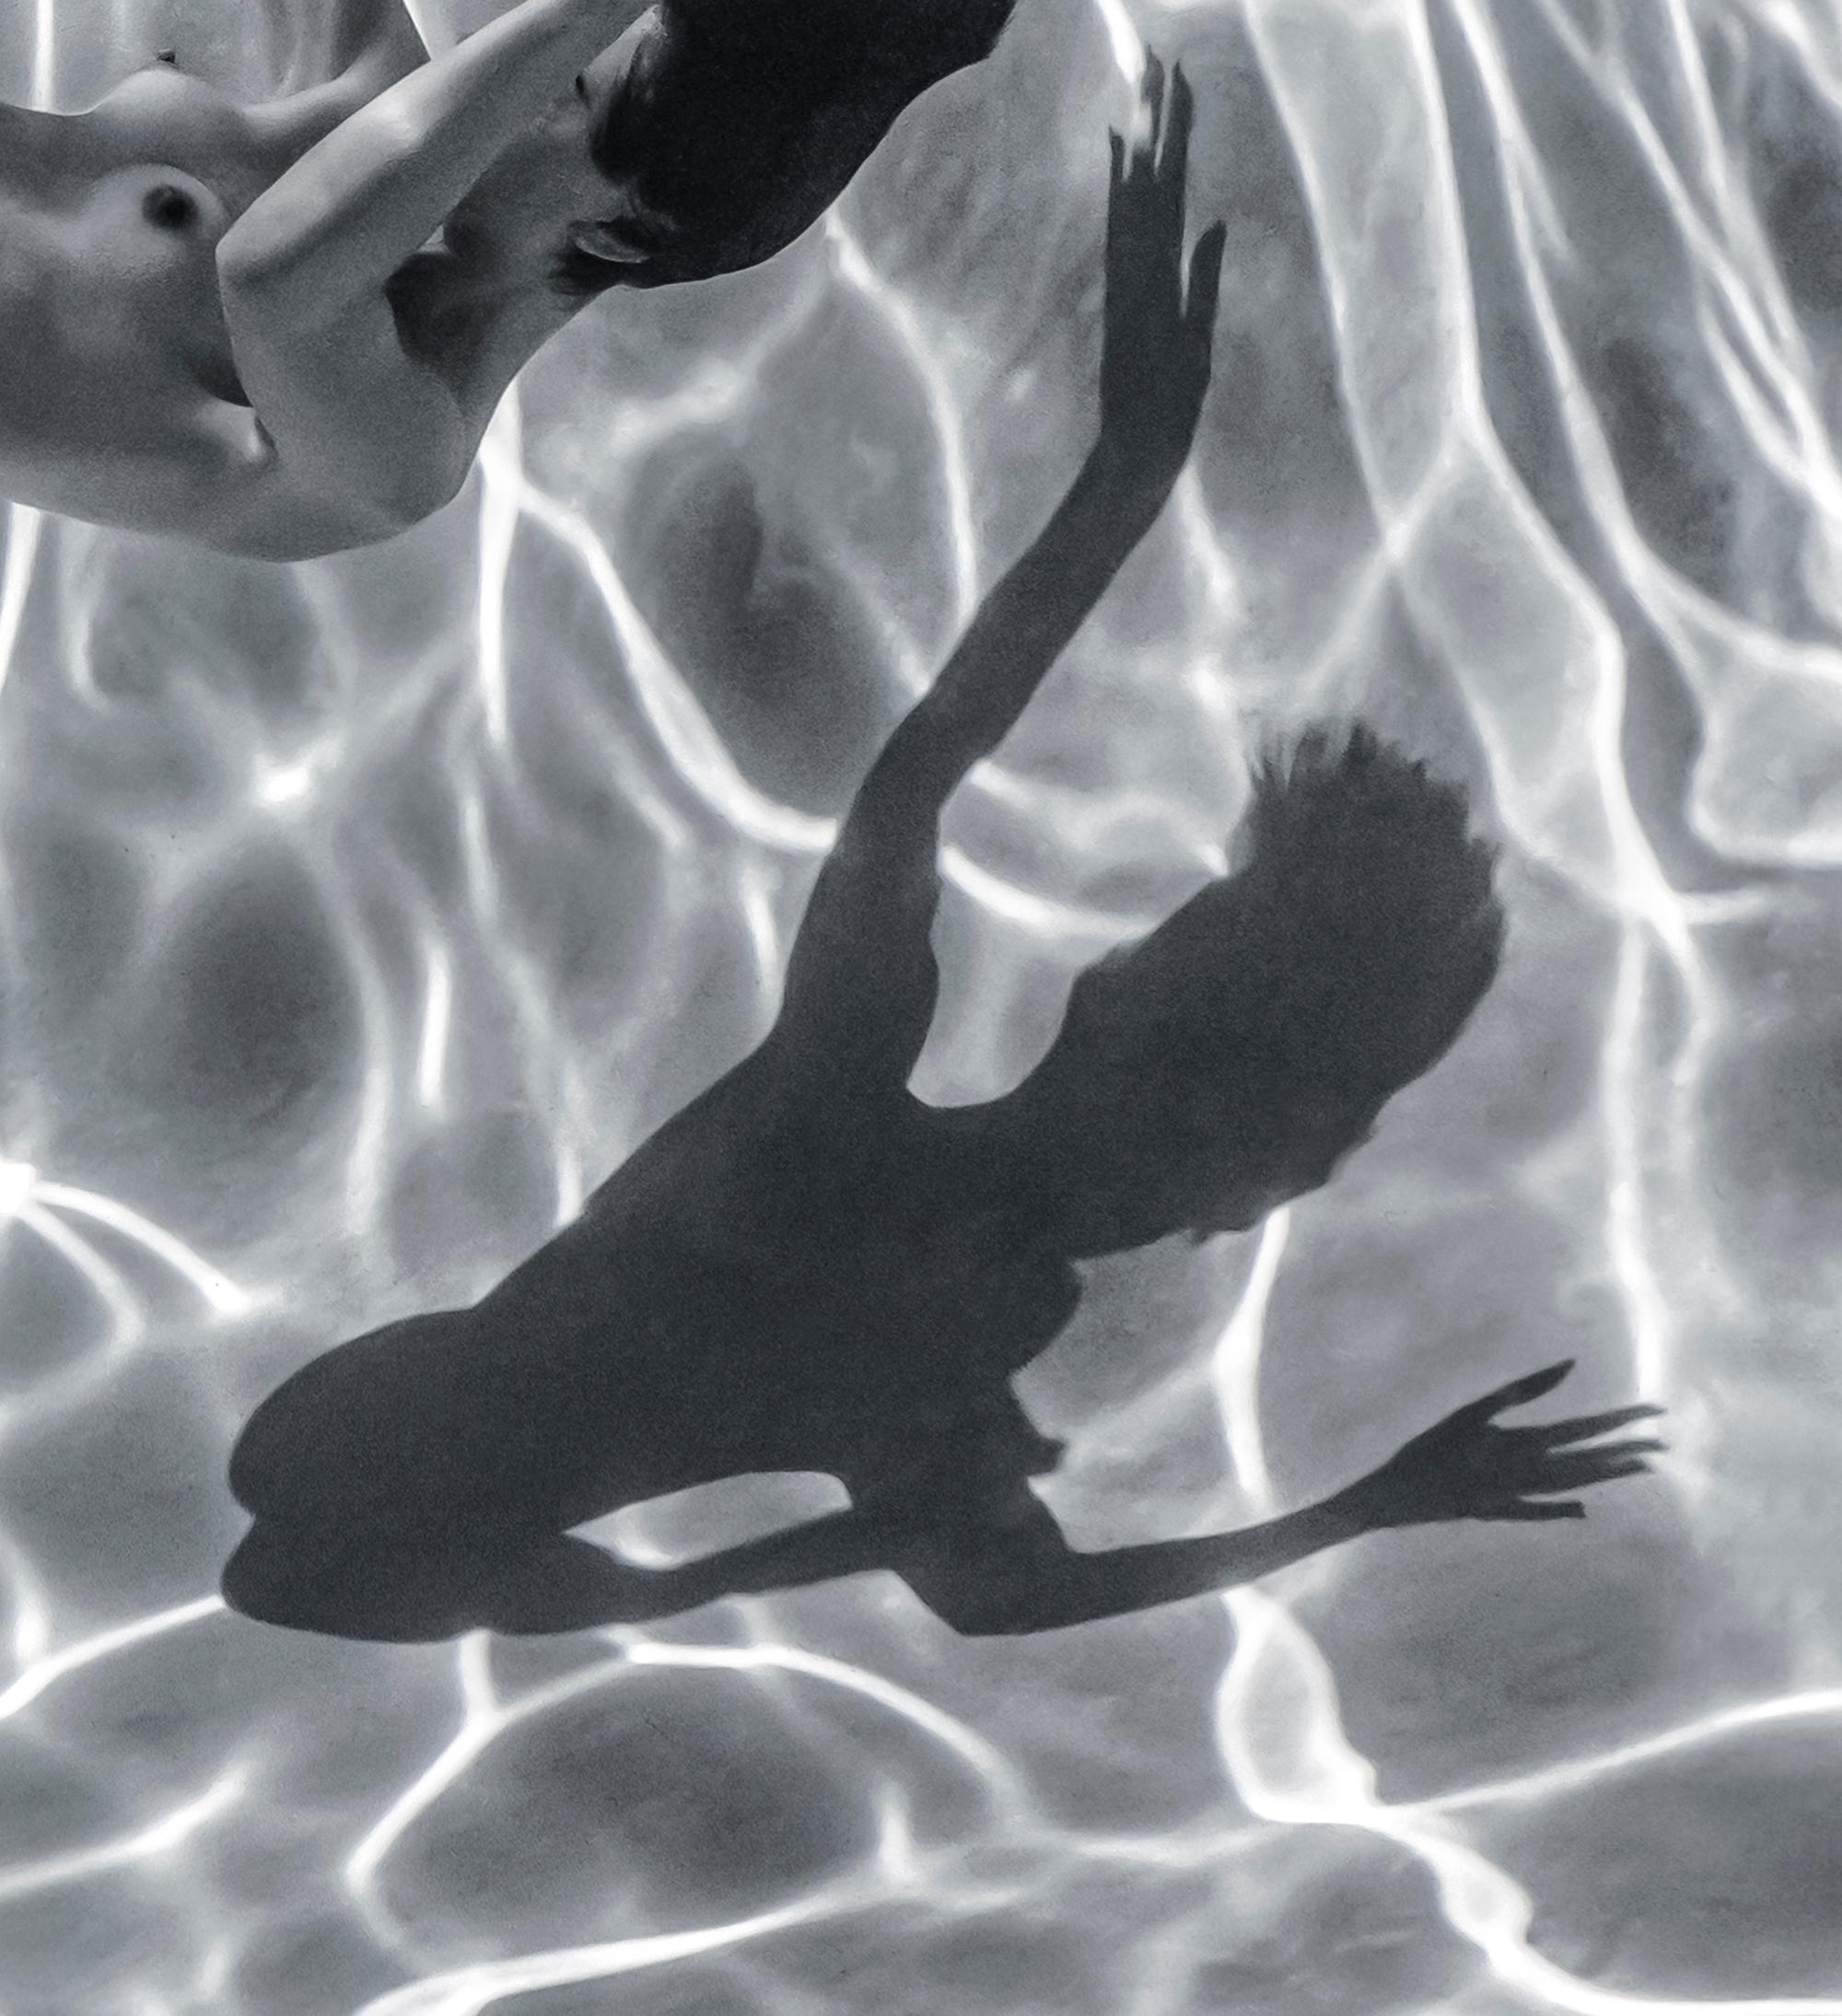 Slow Motion - underwater nude photo - print on aluminum 12 x 8